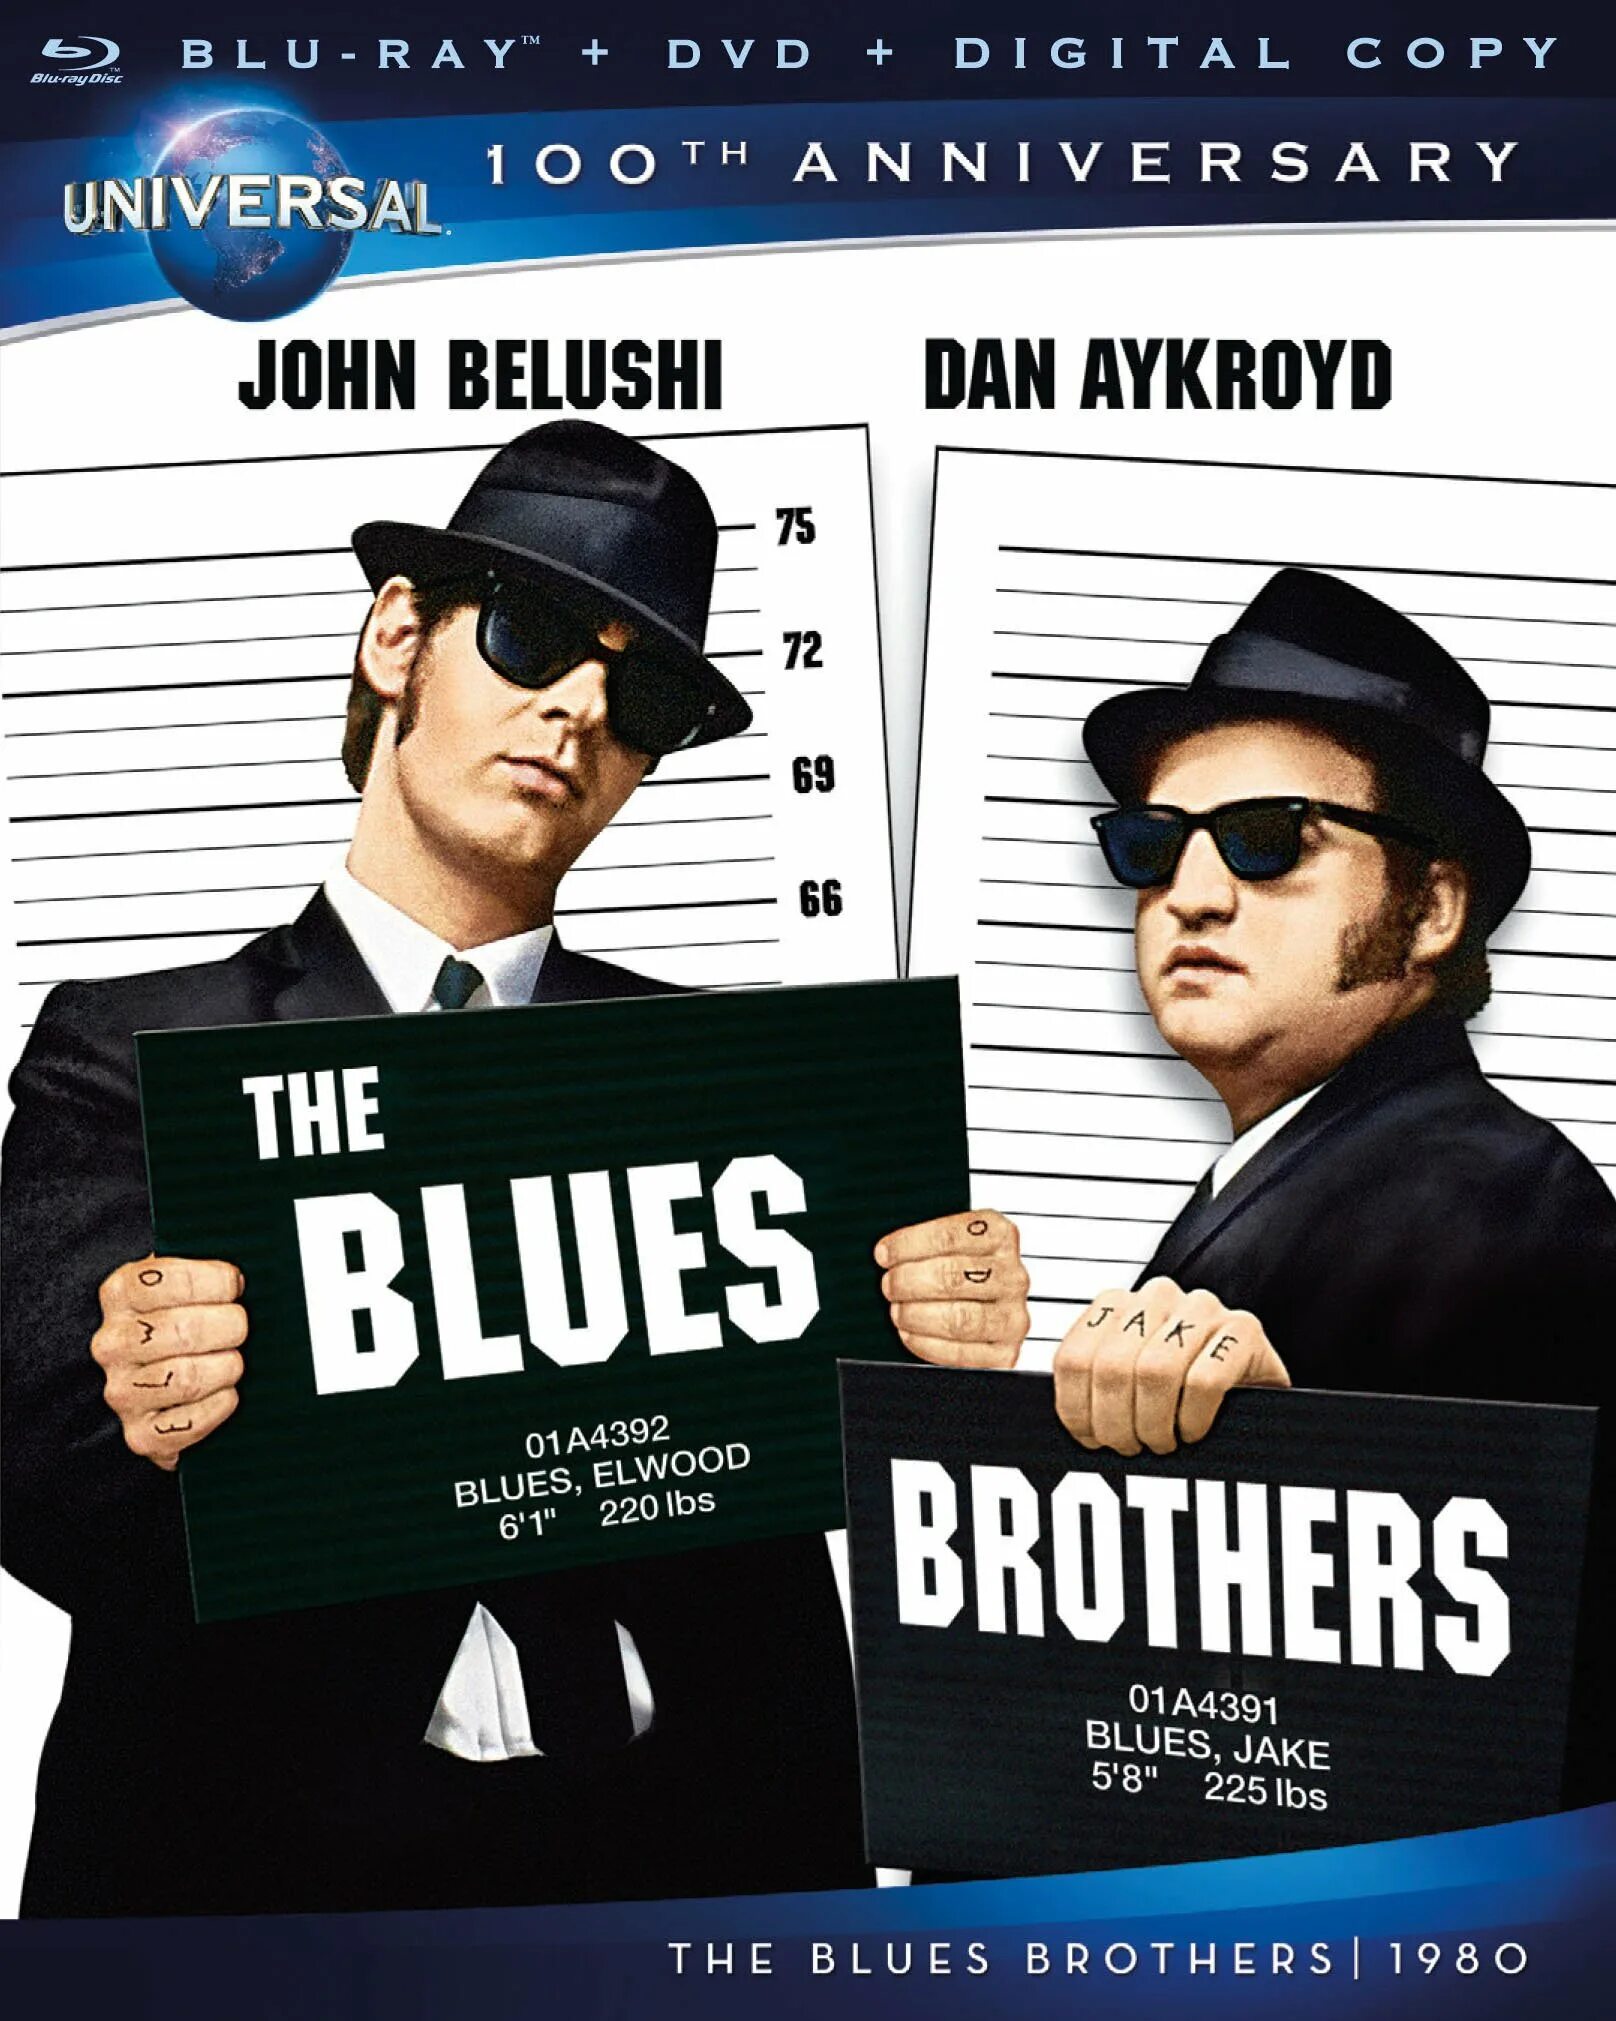 Дэн Эйкройд братья блюз. Братья блюз 1980. КЭБ Кэллоуэй братья блюз. "The Blues brothers" мюзикл.